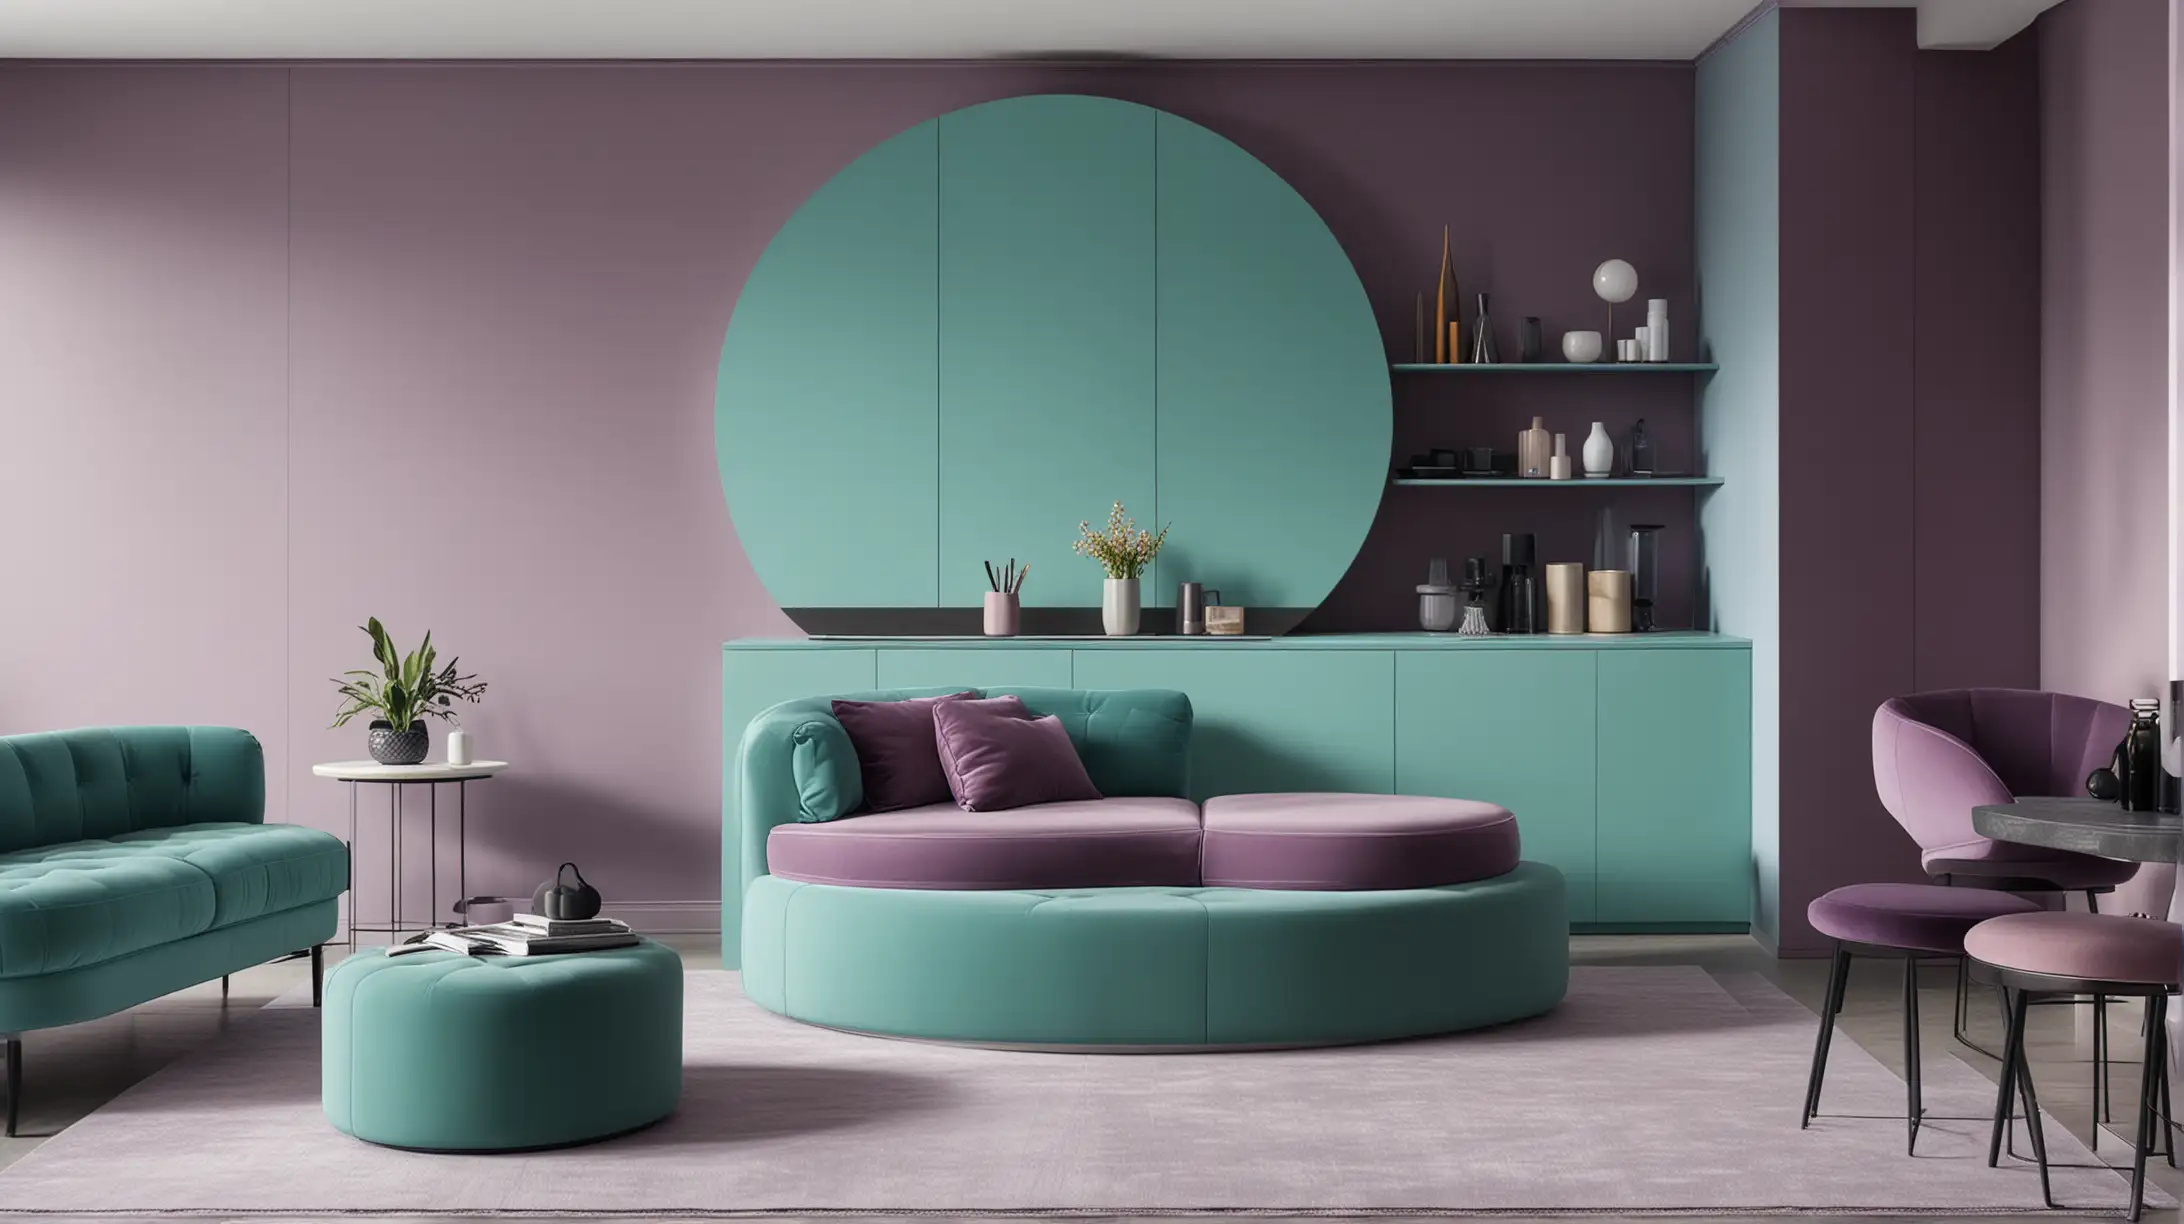 Contemporary Boutique Interior with Designer Furniture and Bold Color Blocking